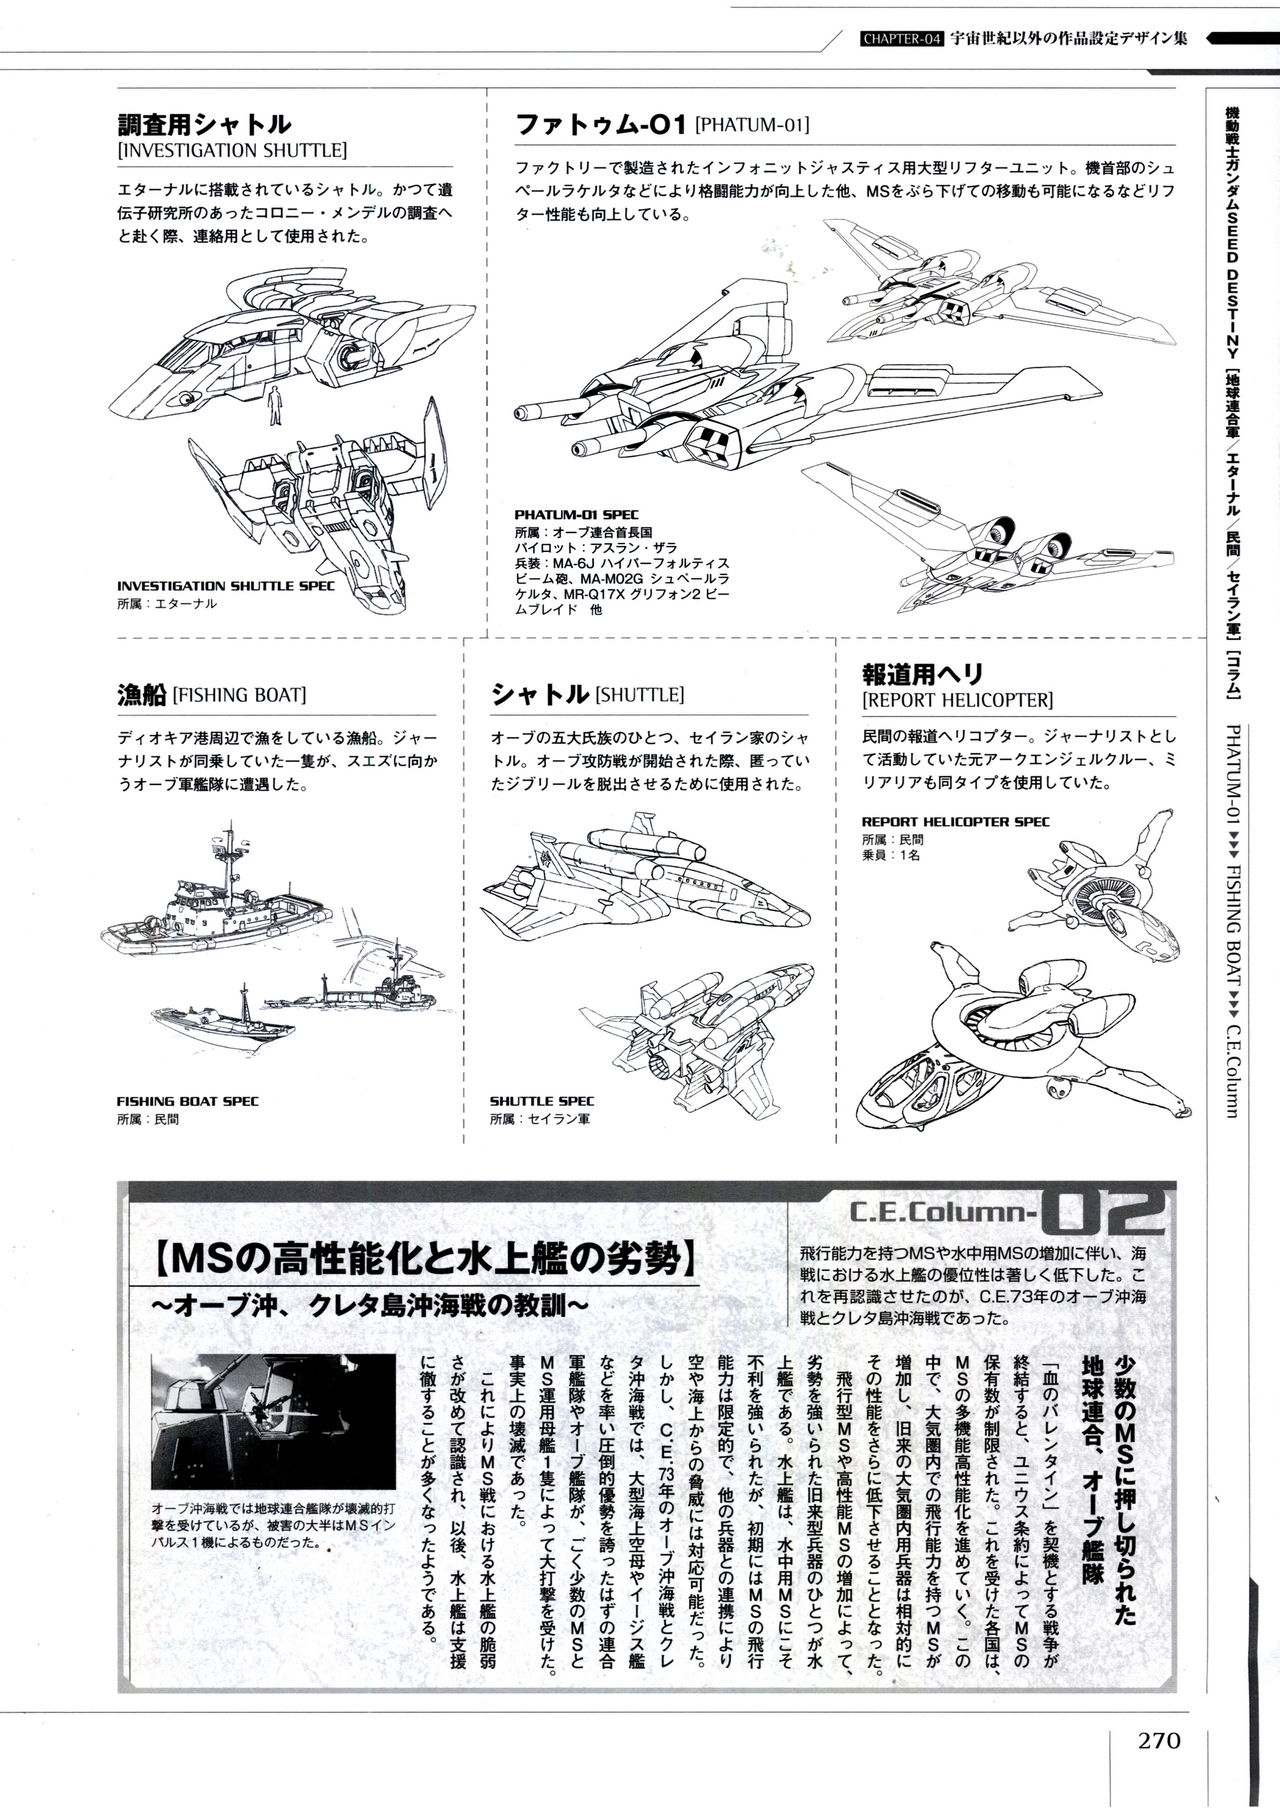 Mobile Suit Gundam - Ship & Aerospace Plane Encyclopedia - Revised Edition 275